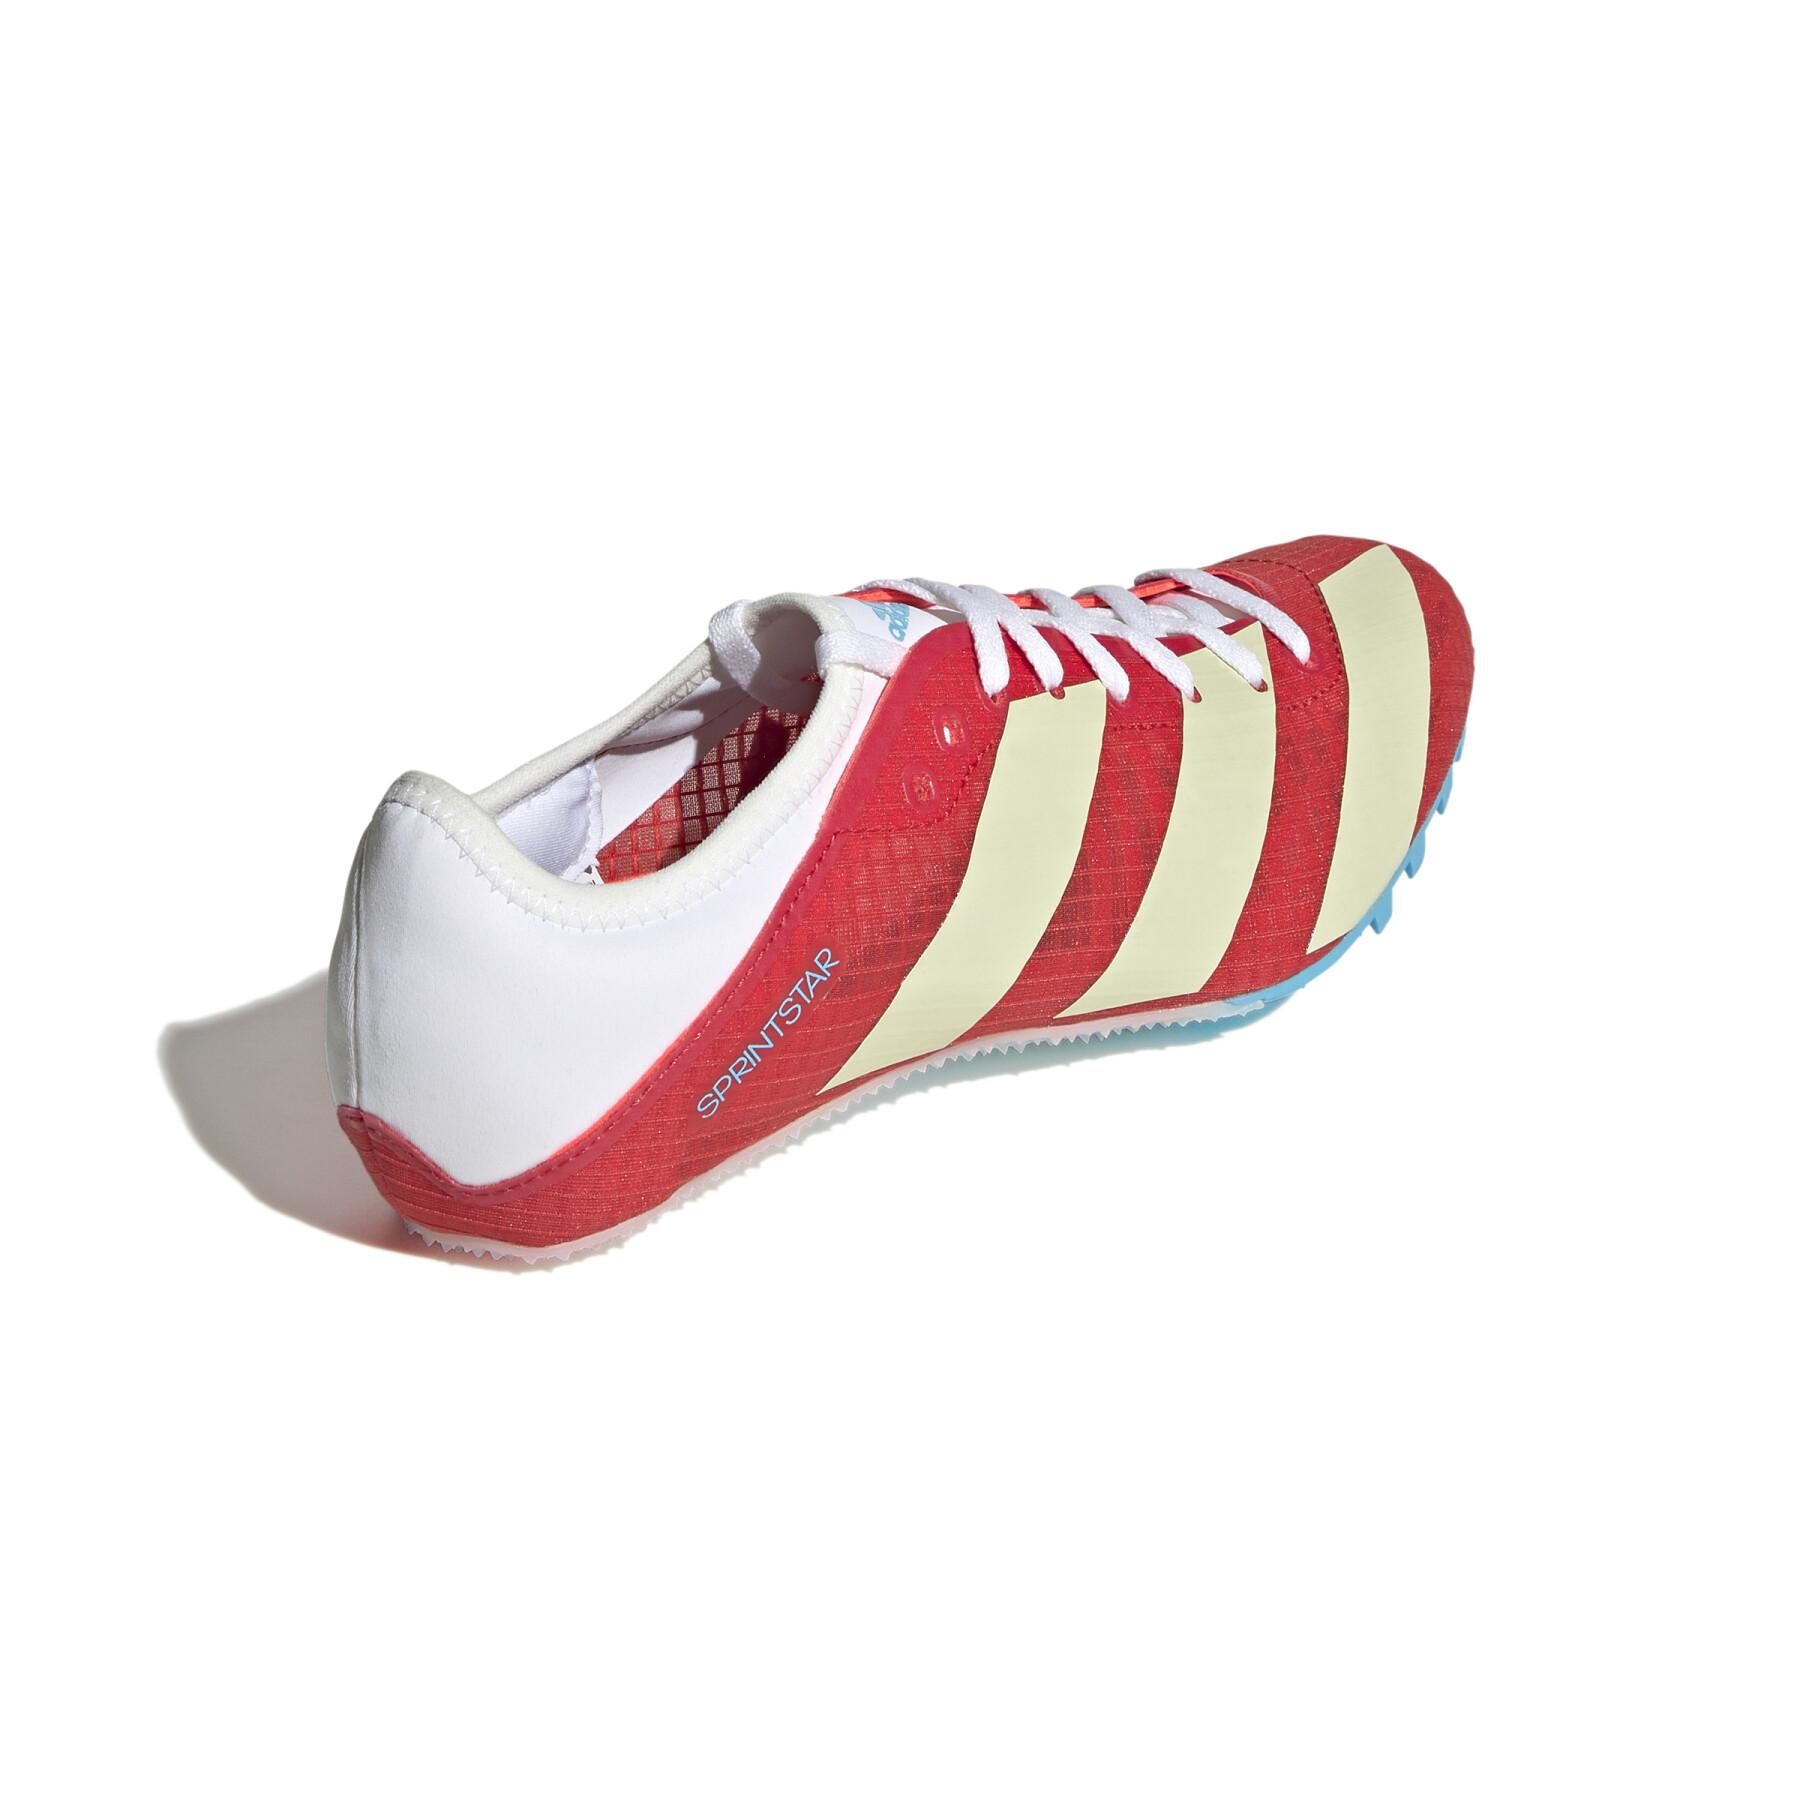 Athletic shoes adidas Sprintstar